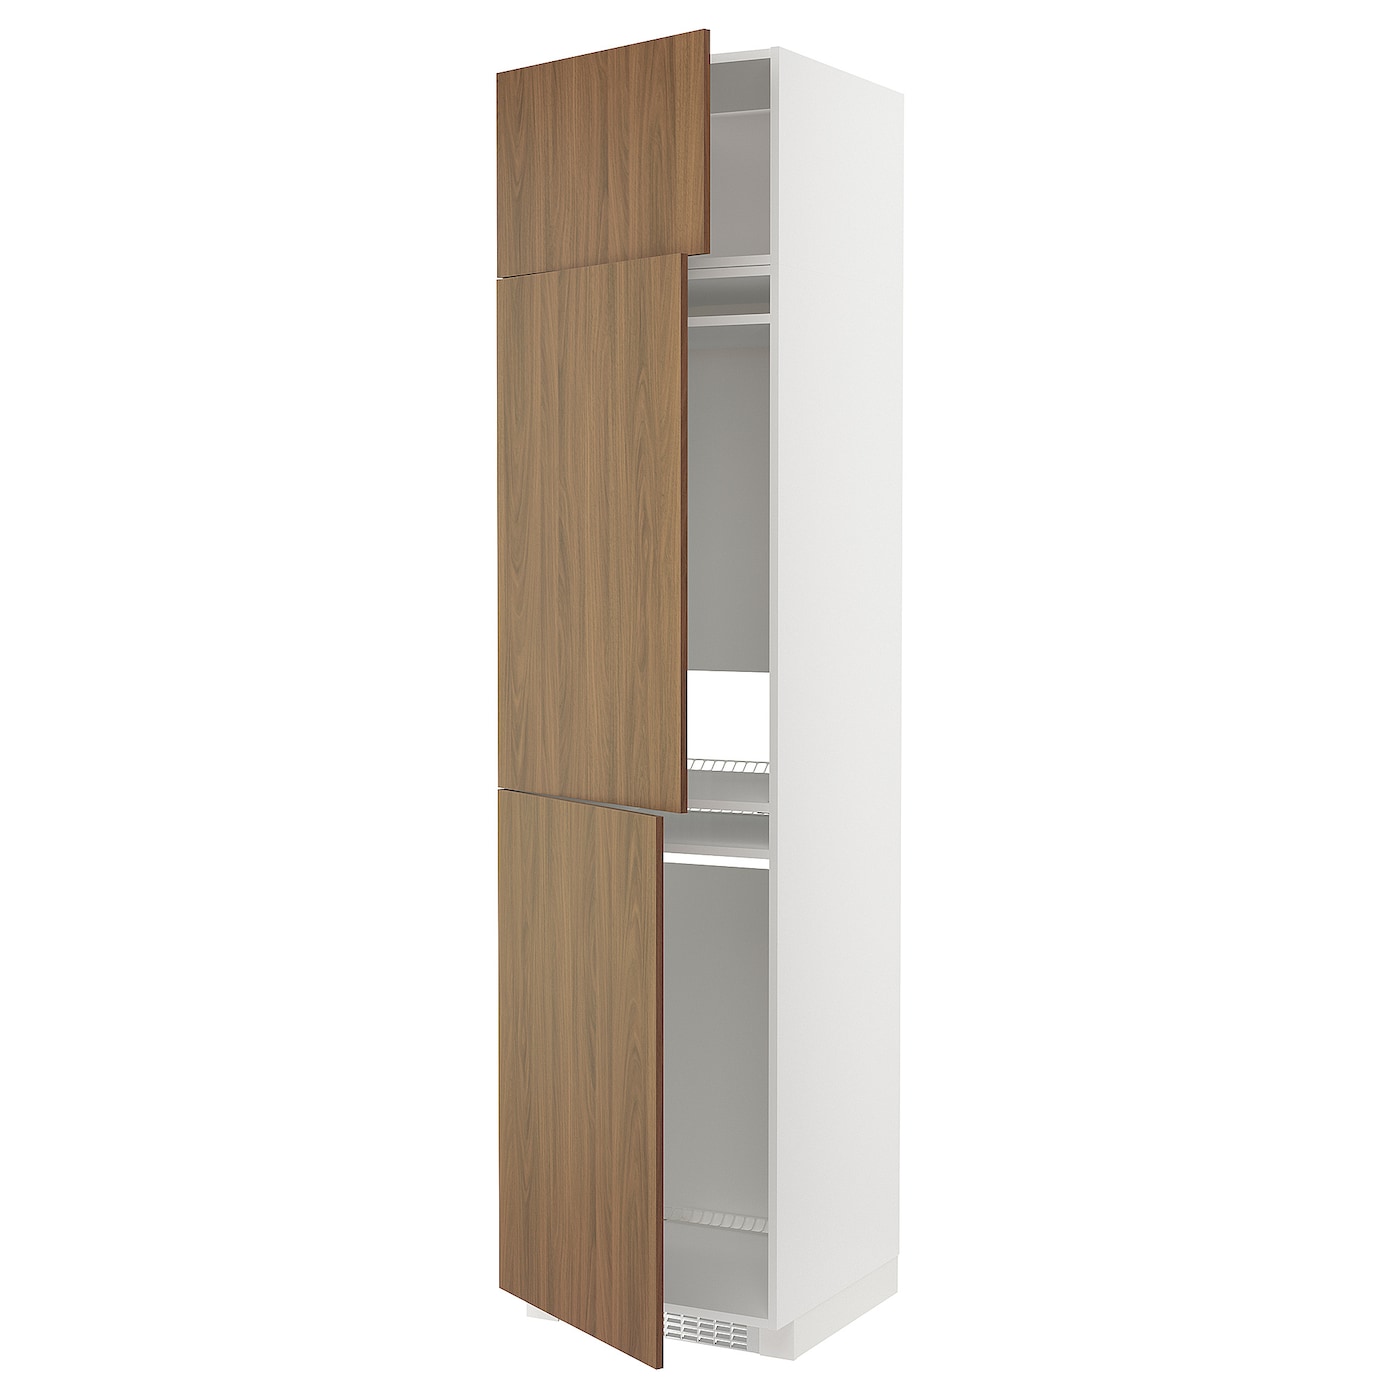 Высокий кухонный шкаф - IKEA METOD/МЕТОД ИКЕА, 240х60х60 см, белый/коричневый